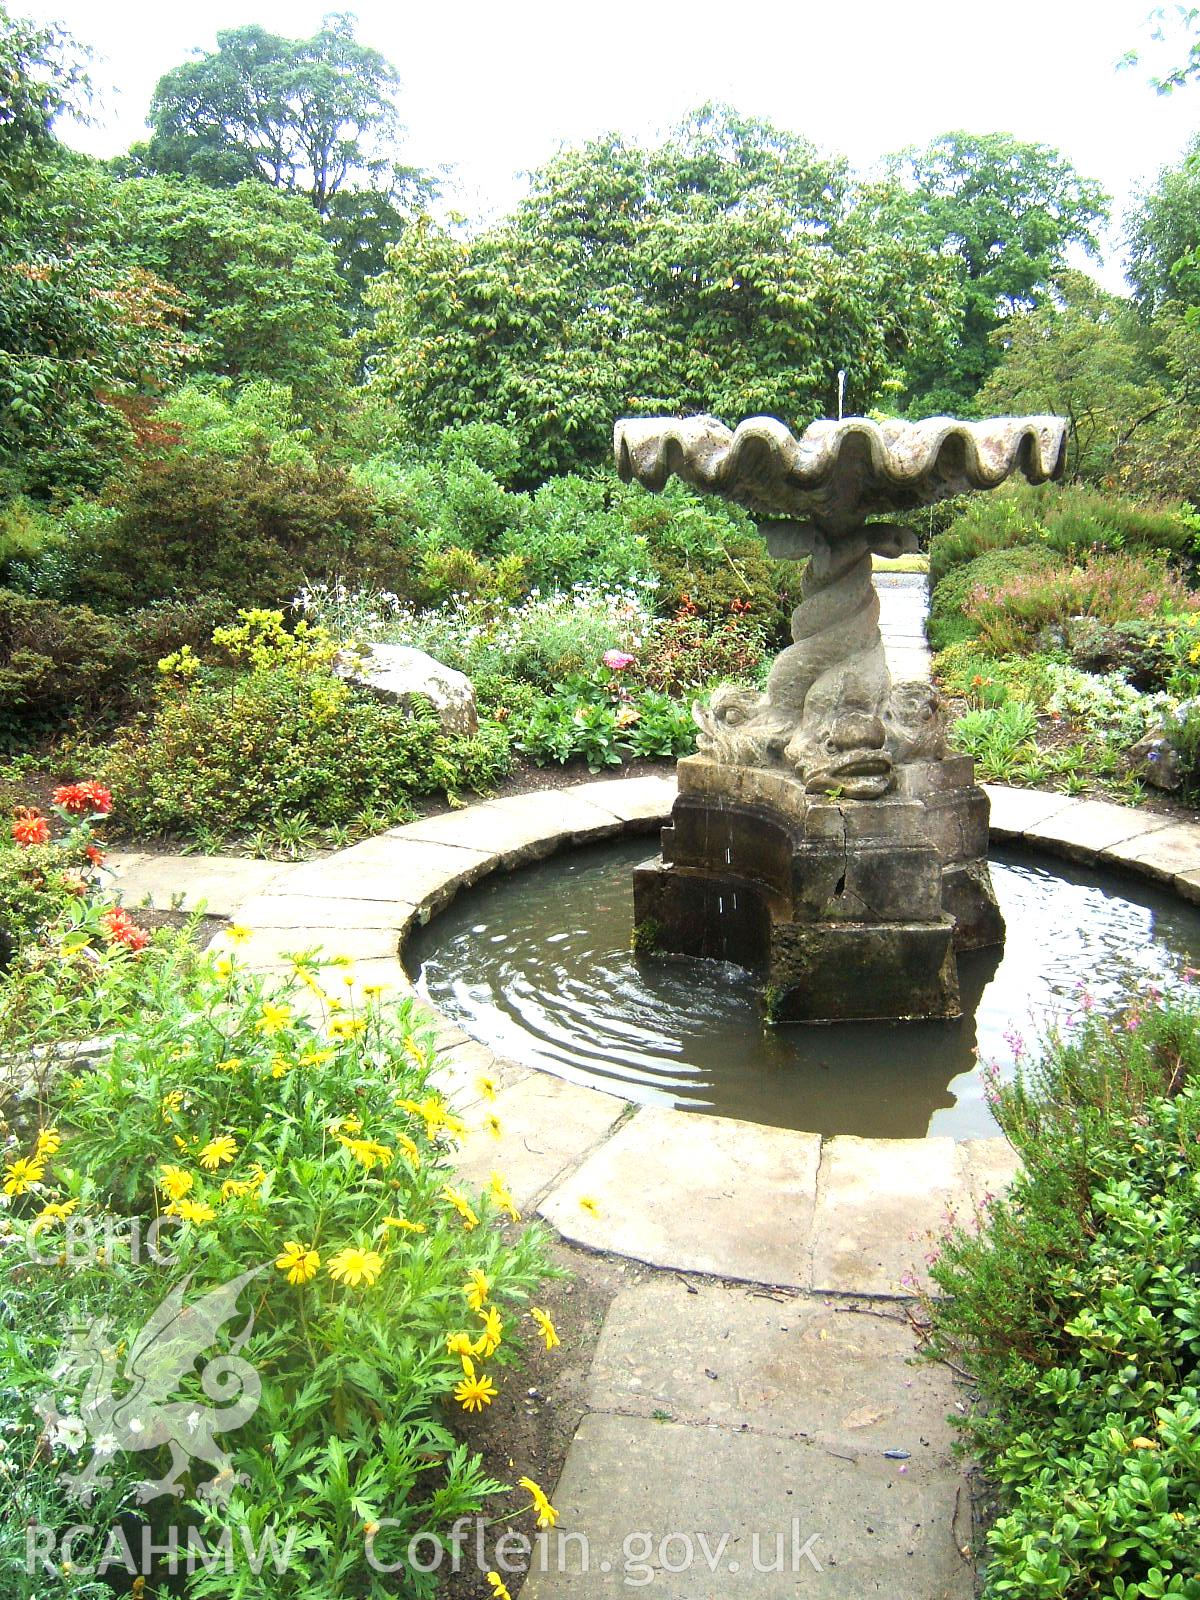 Eighteenth-century Scallop Fountain in the centre of the Round Garden.